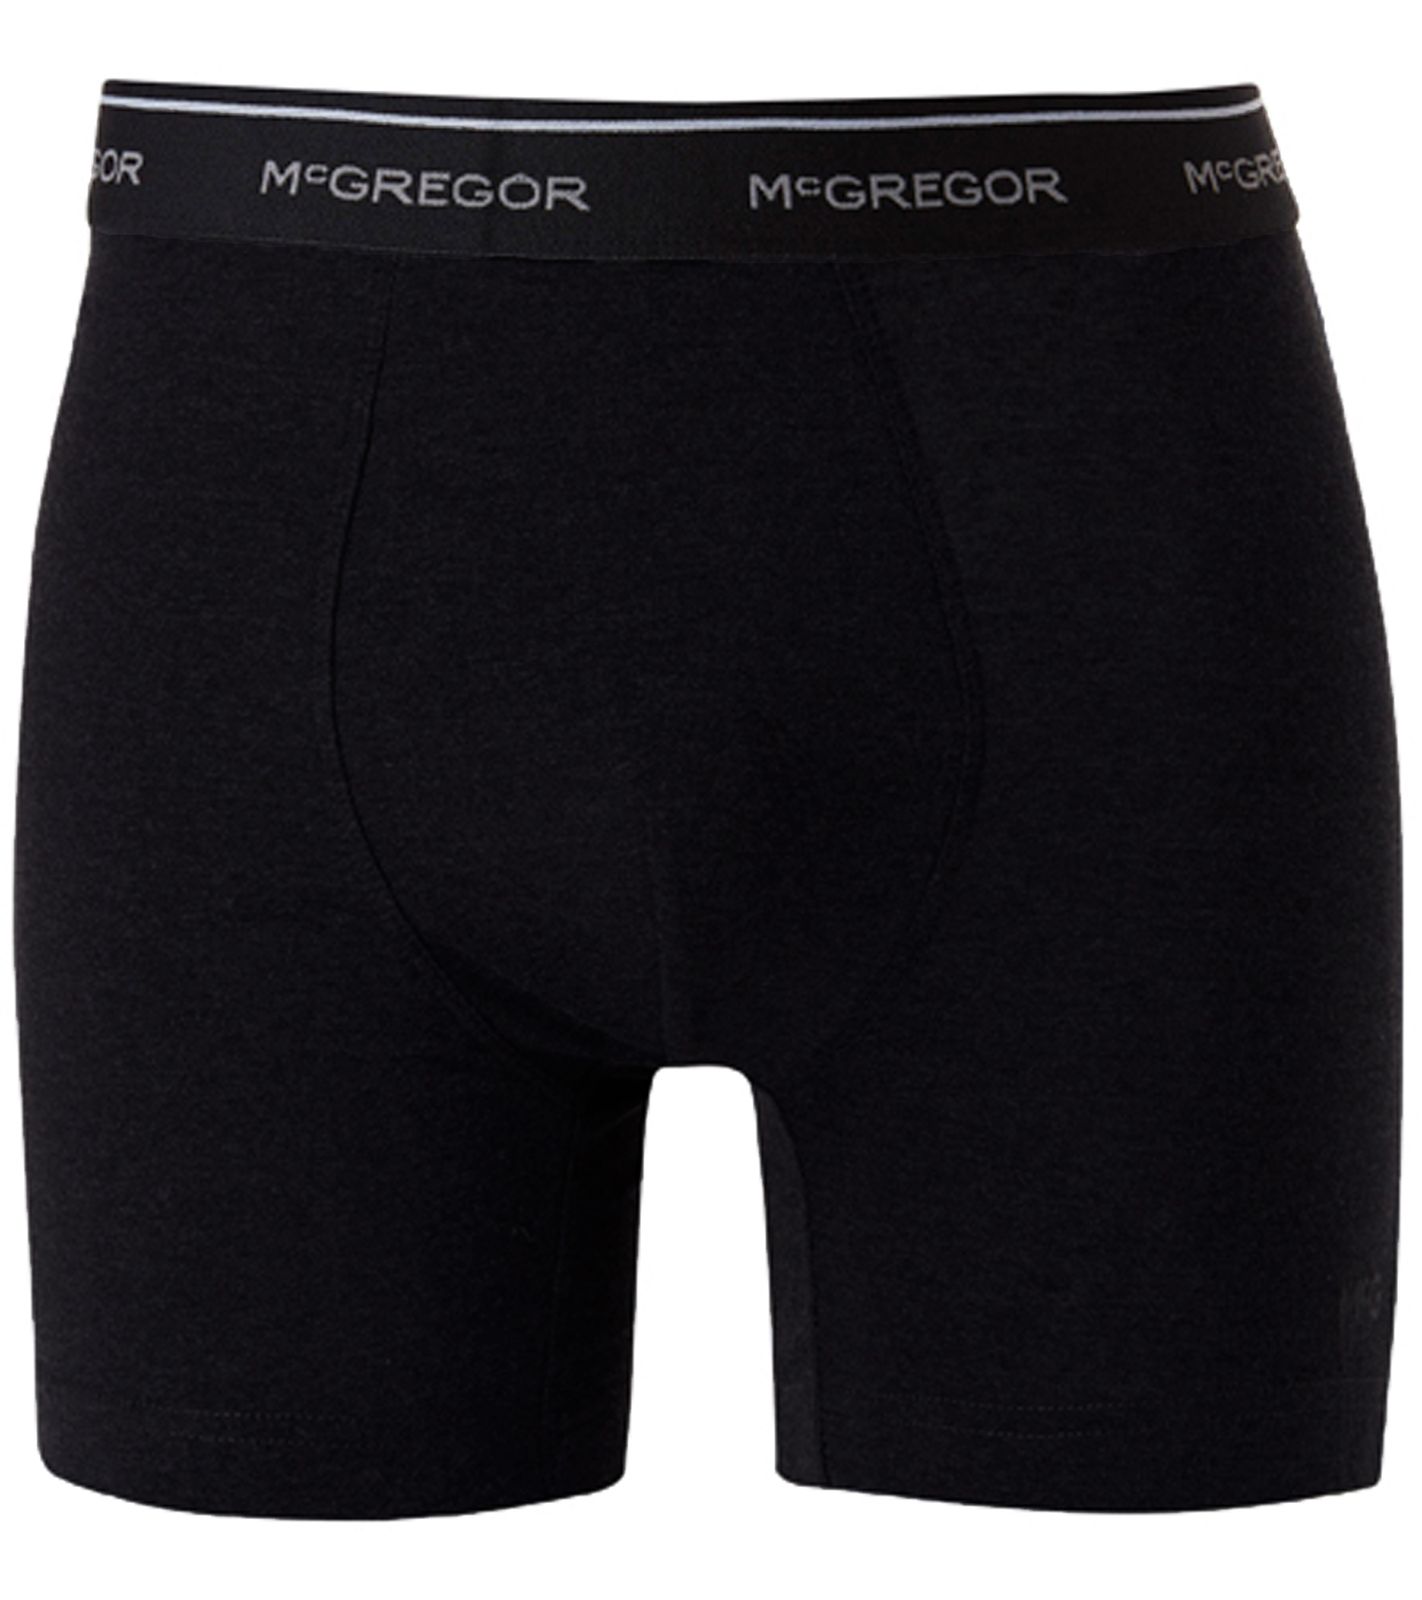 Pack of 2 McGREGOR boxer shorts sustainable men's cotton underwear